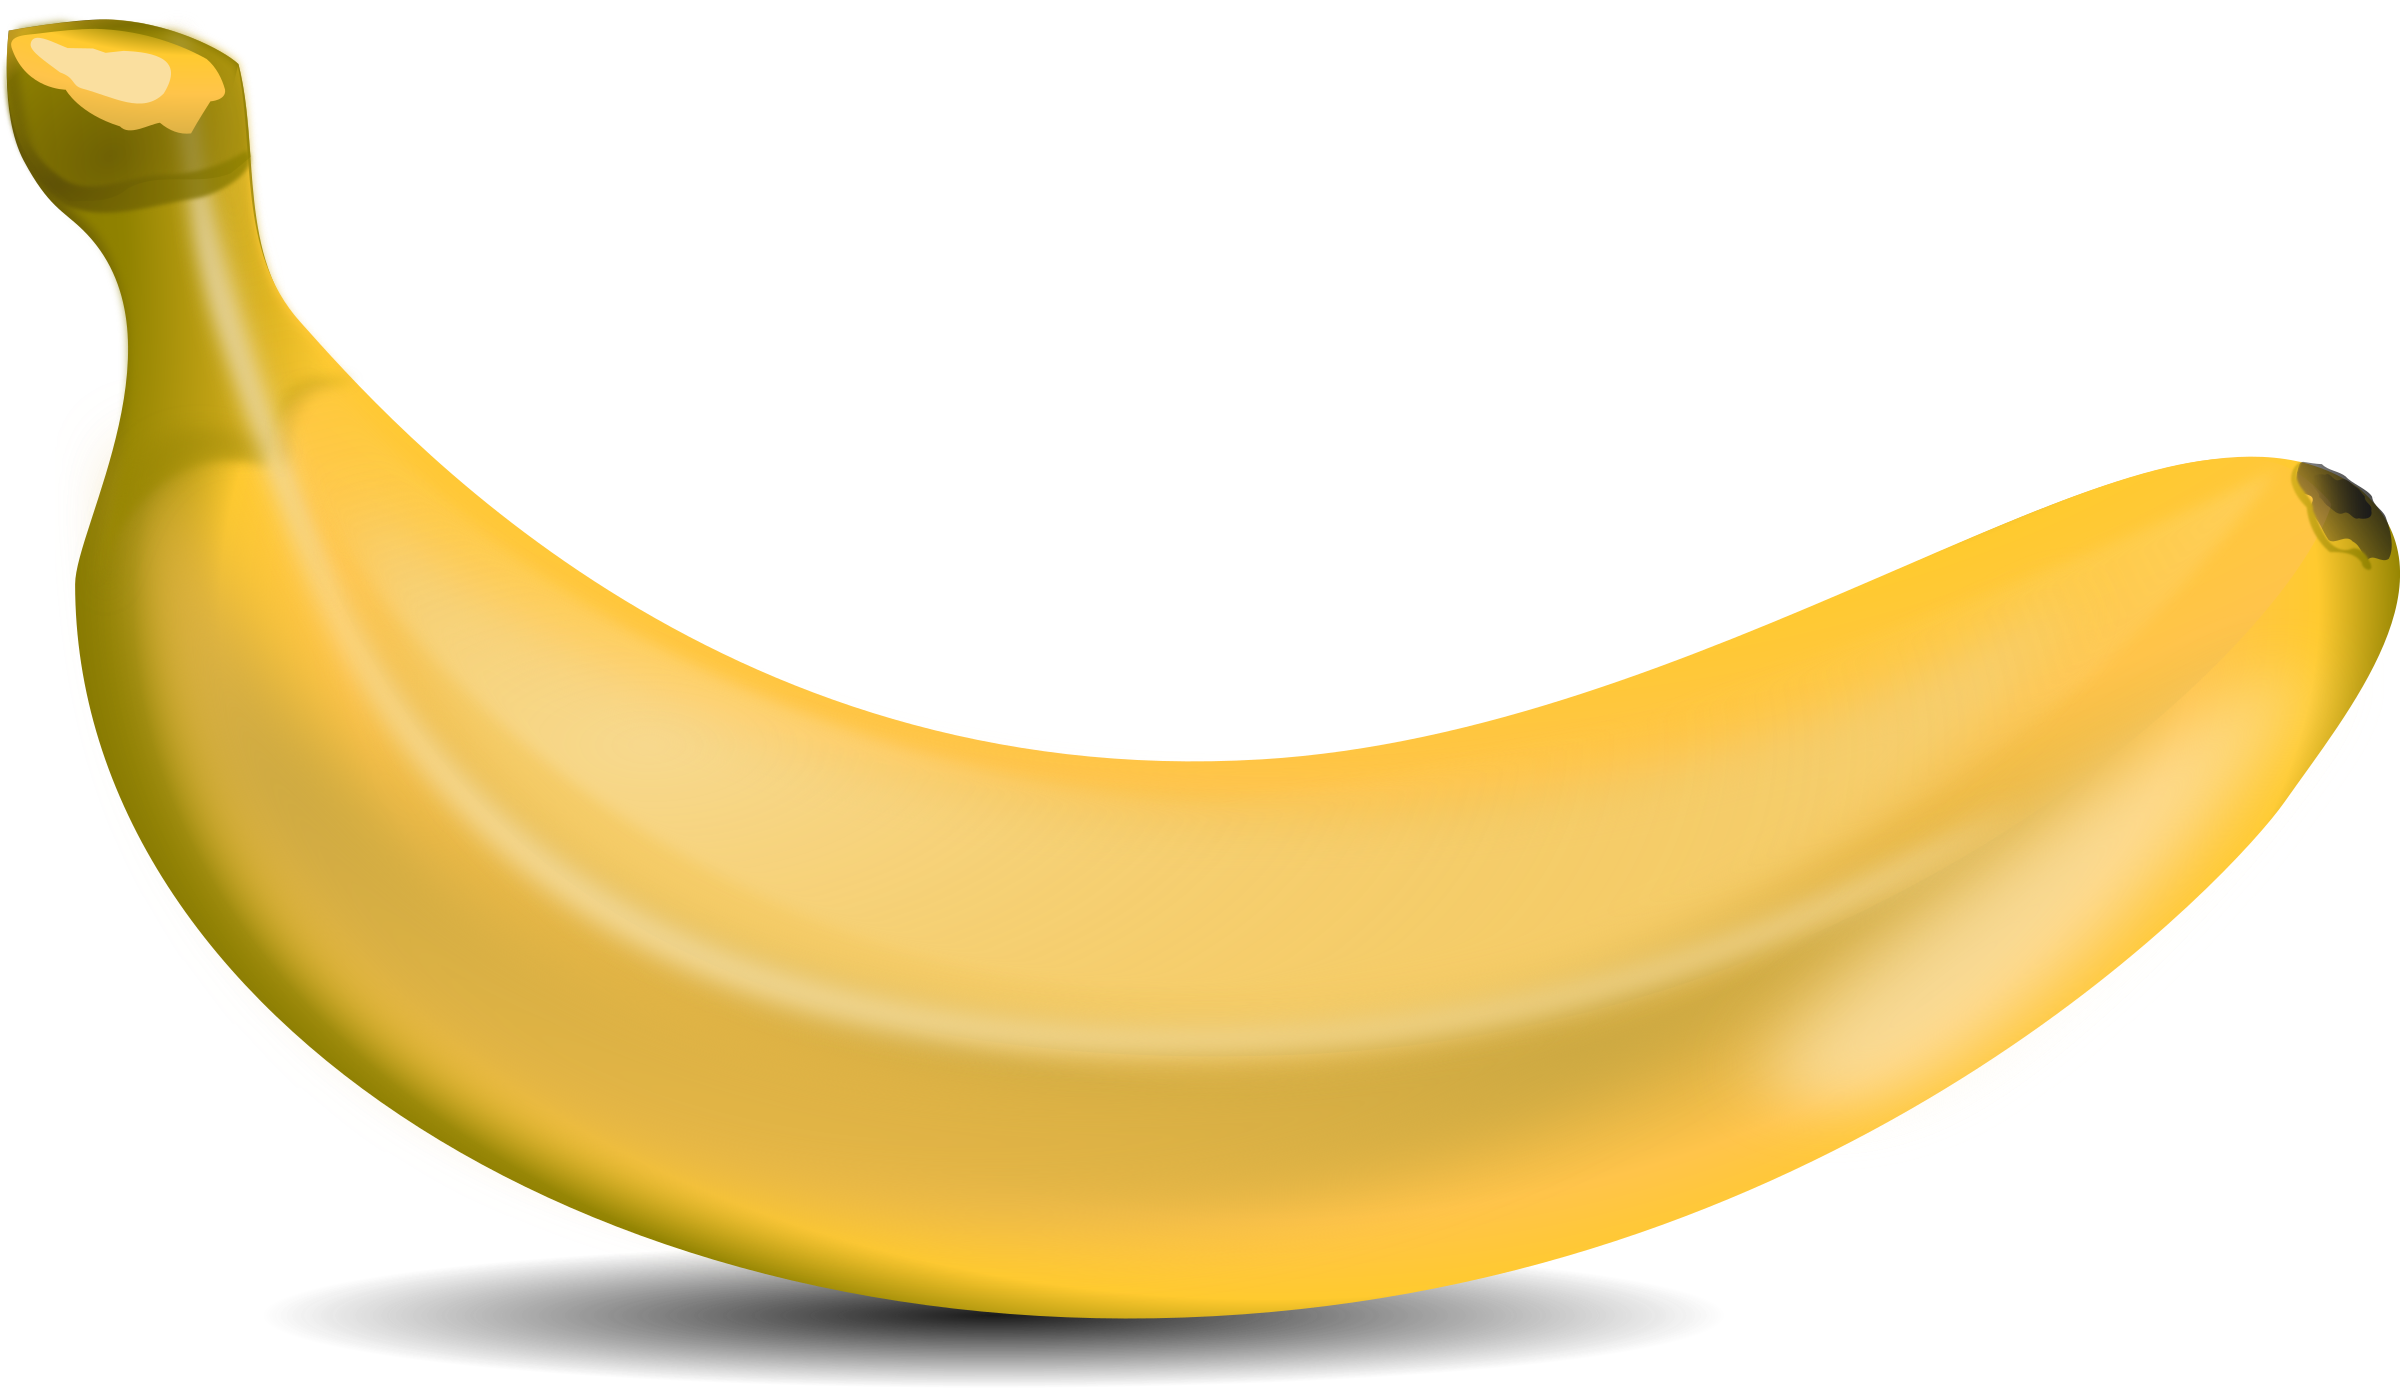 Png images transparent free. Bananas clipart yellow banana